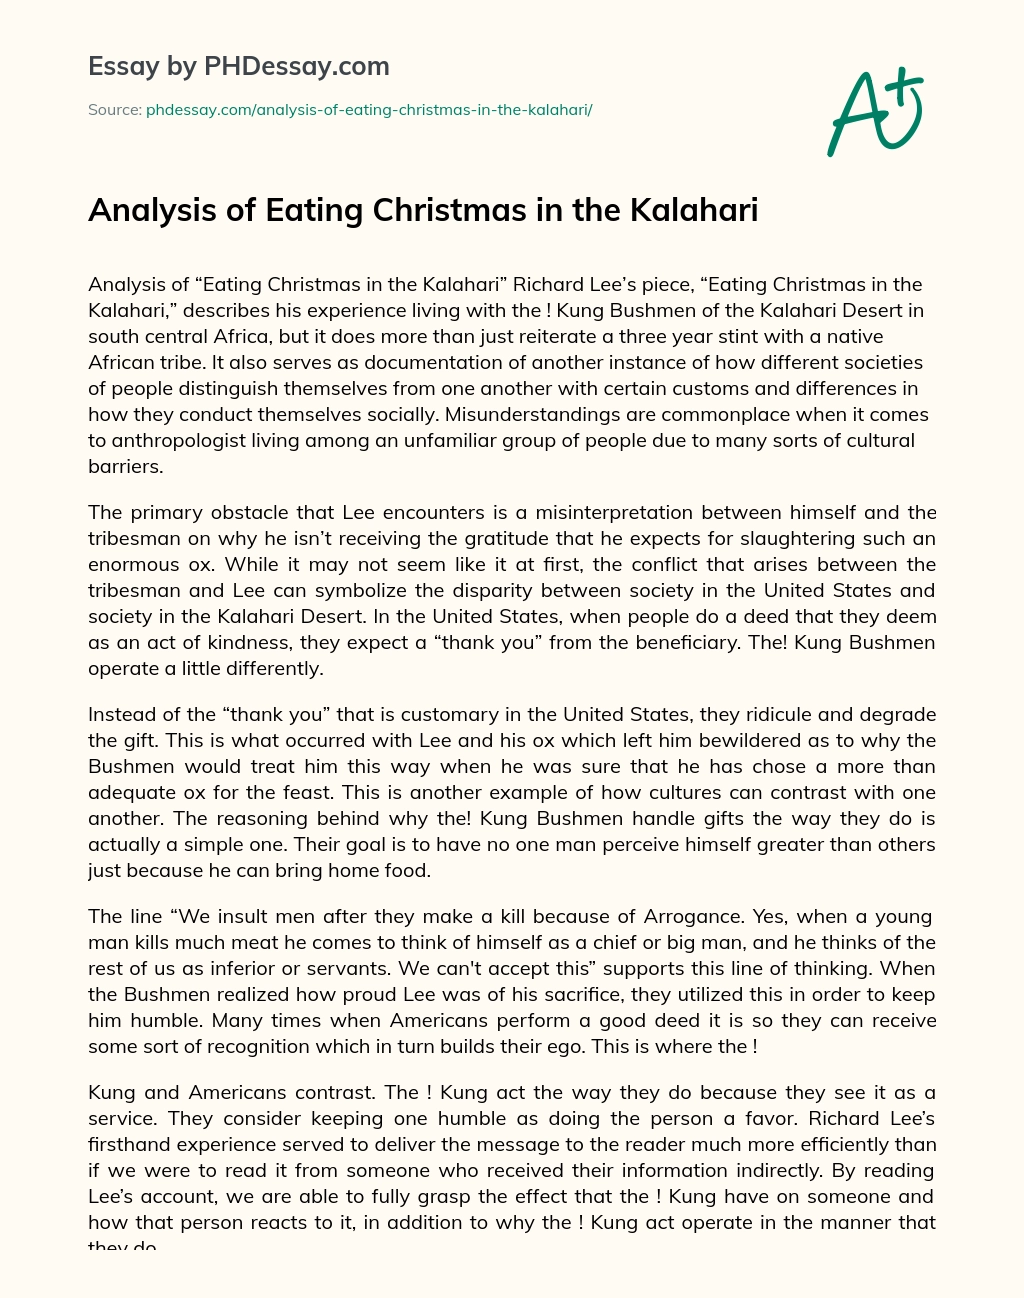 Analysis of Eating Christmas in the Kalahari essay